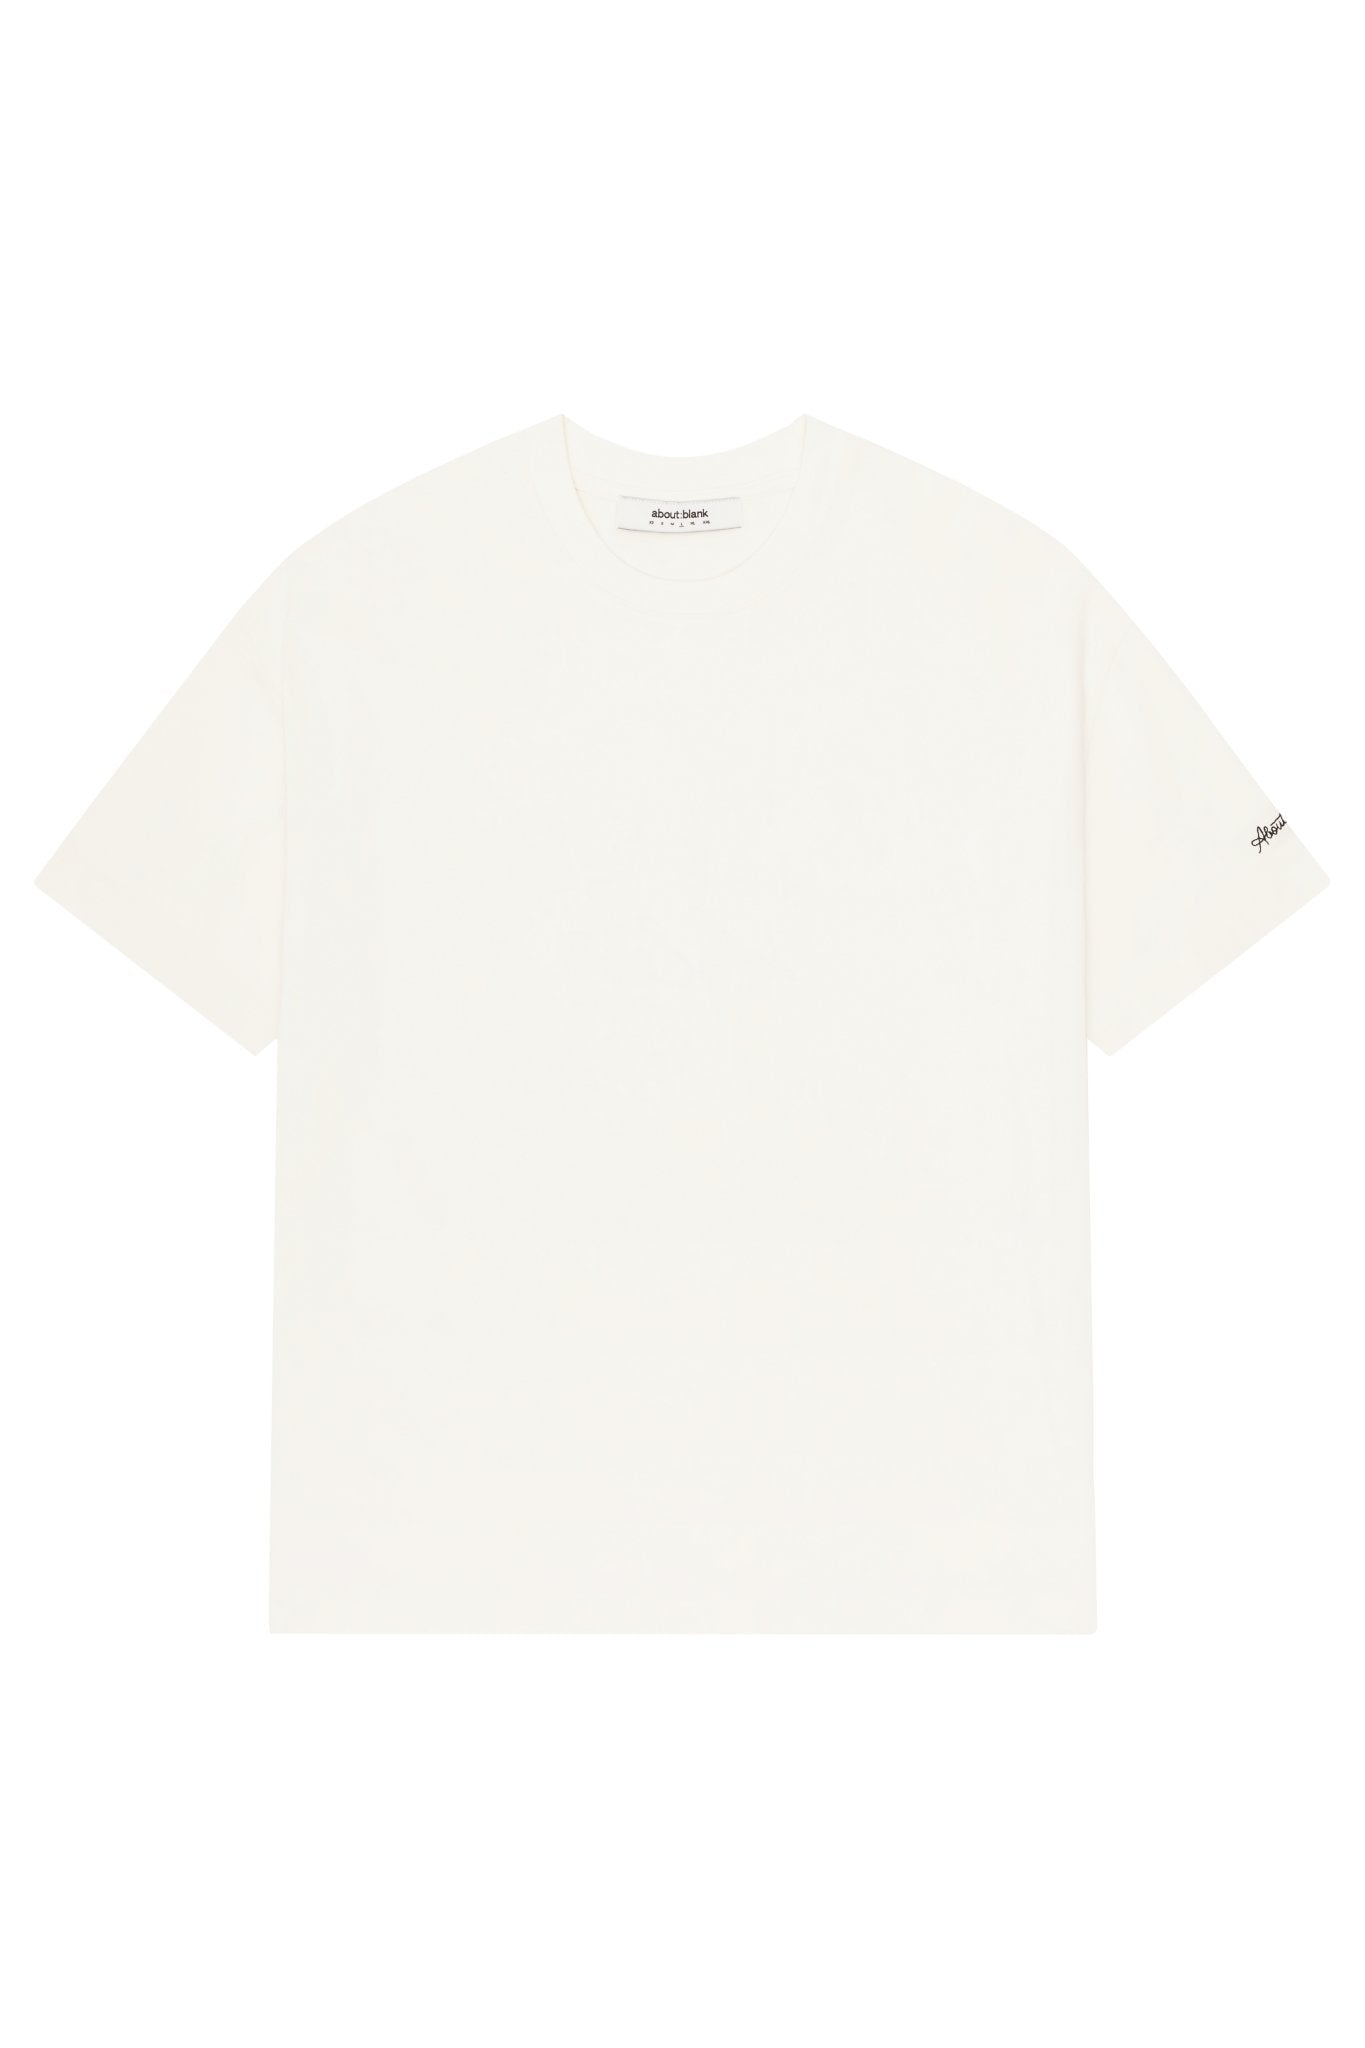 about---blank.comchain stitch t-shirt oat/black